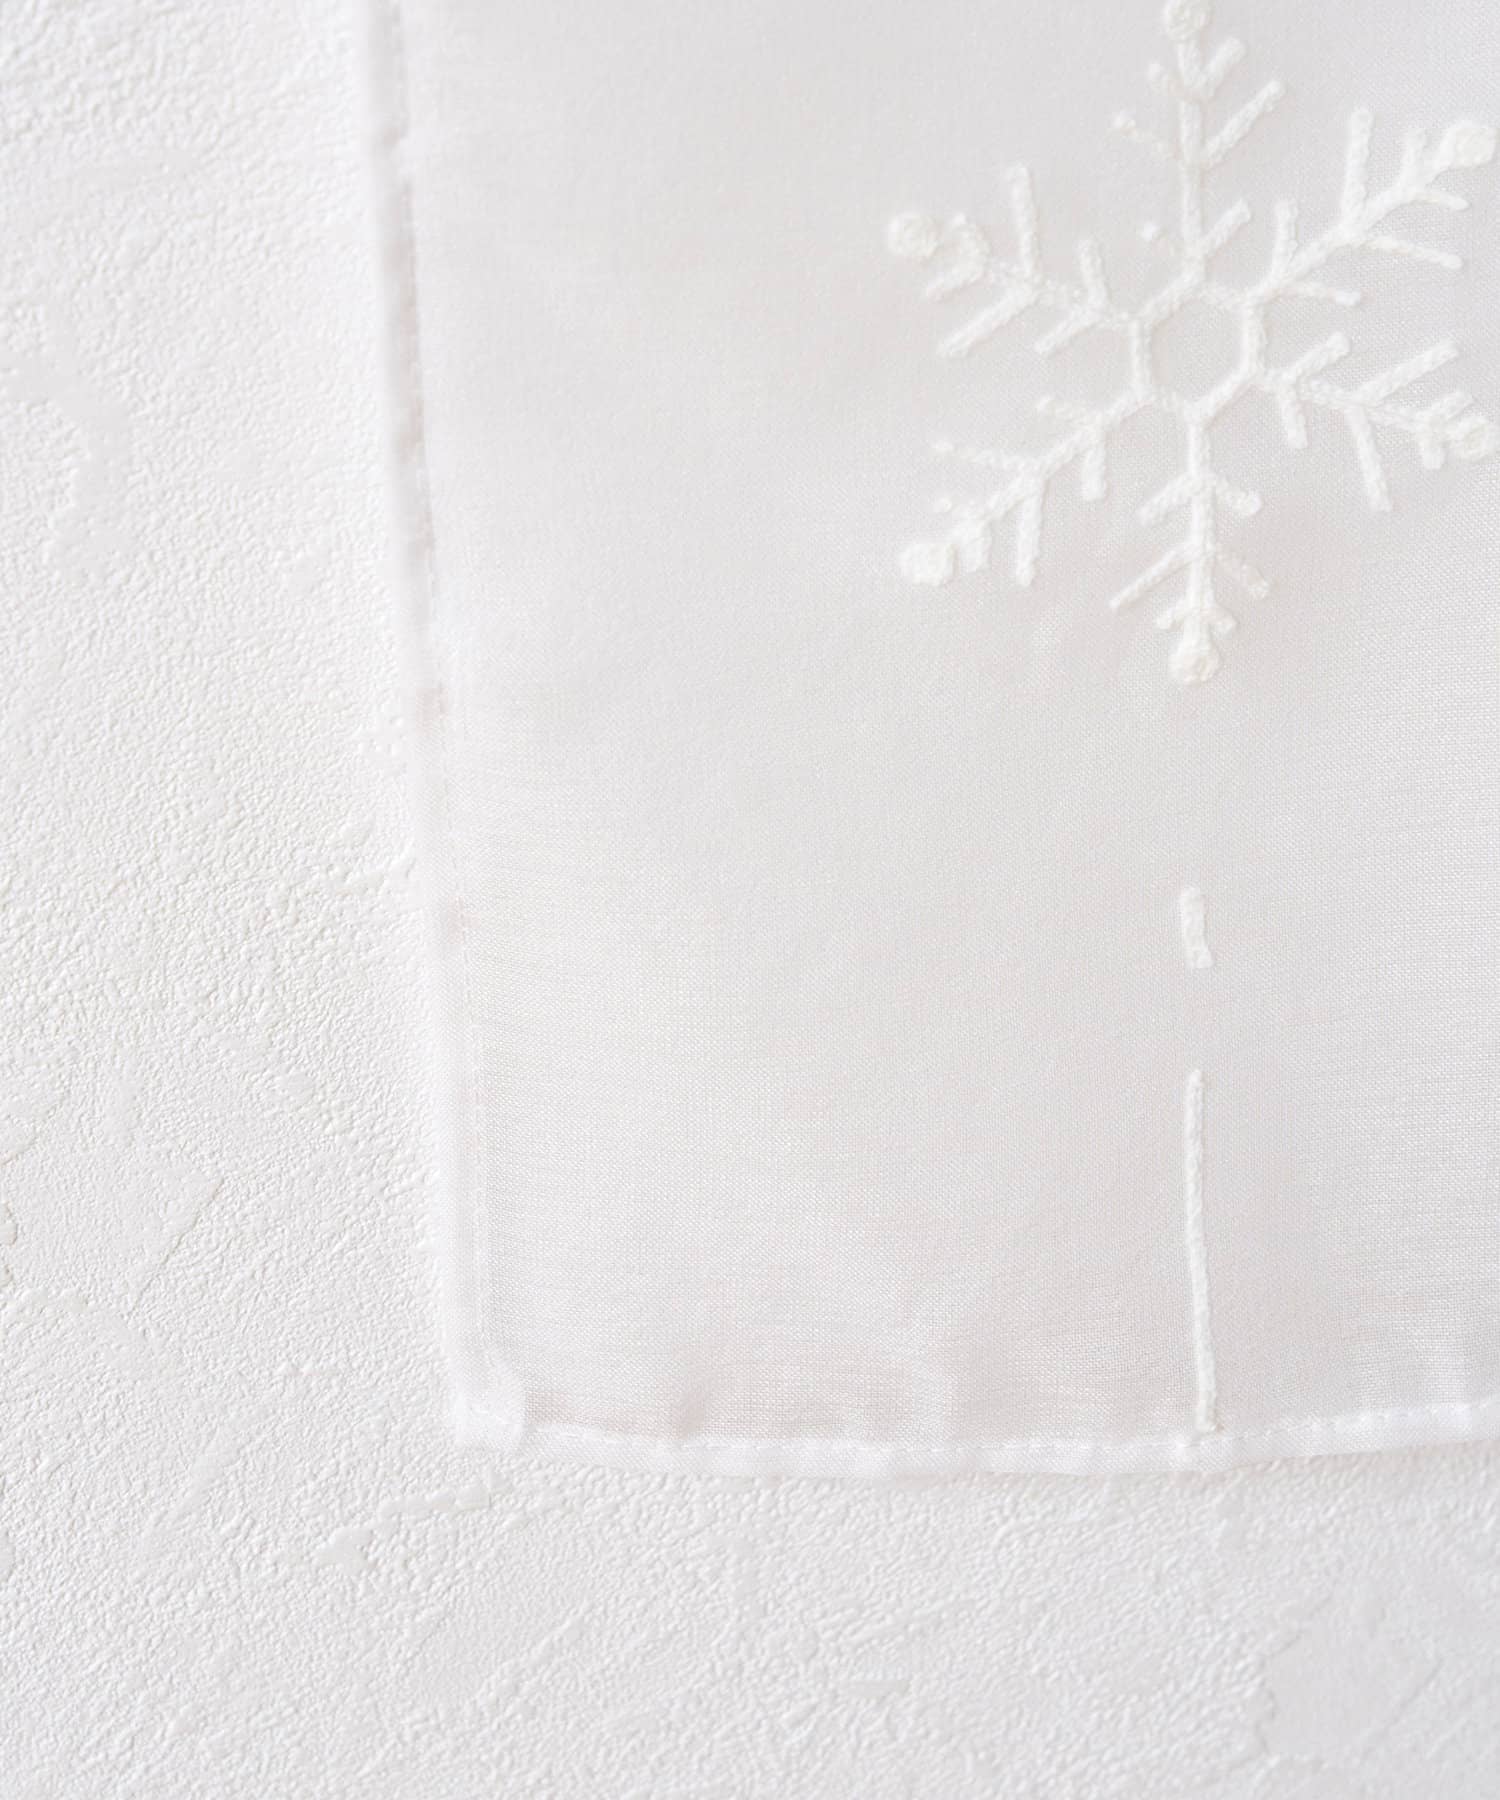 3COINS(スリーコインズ) 刺繍セパレートカーテン雪の結晶